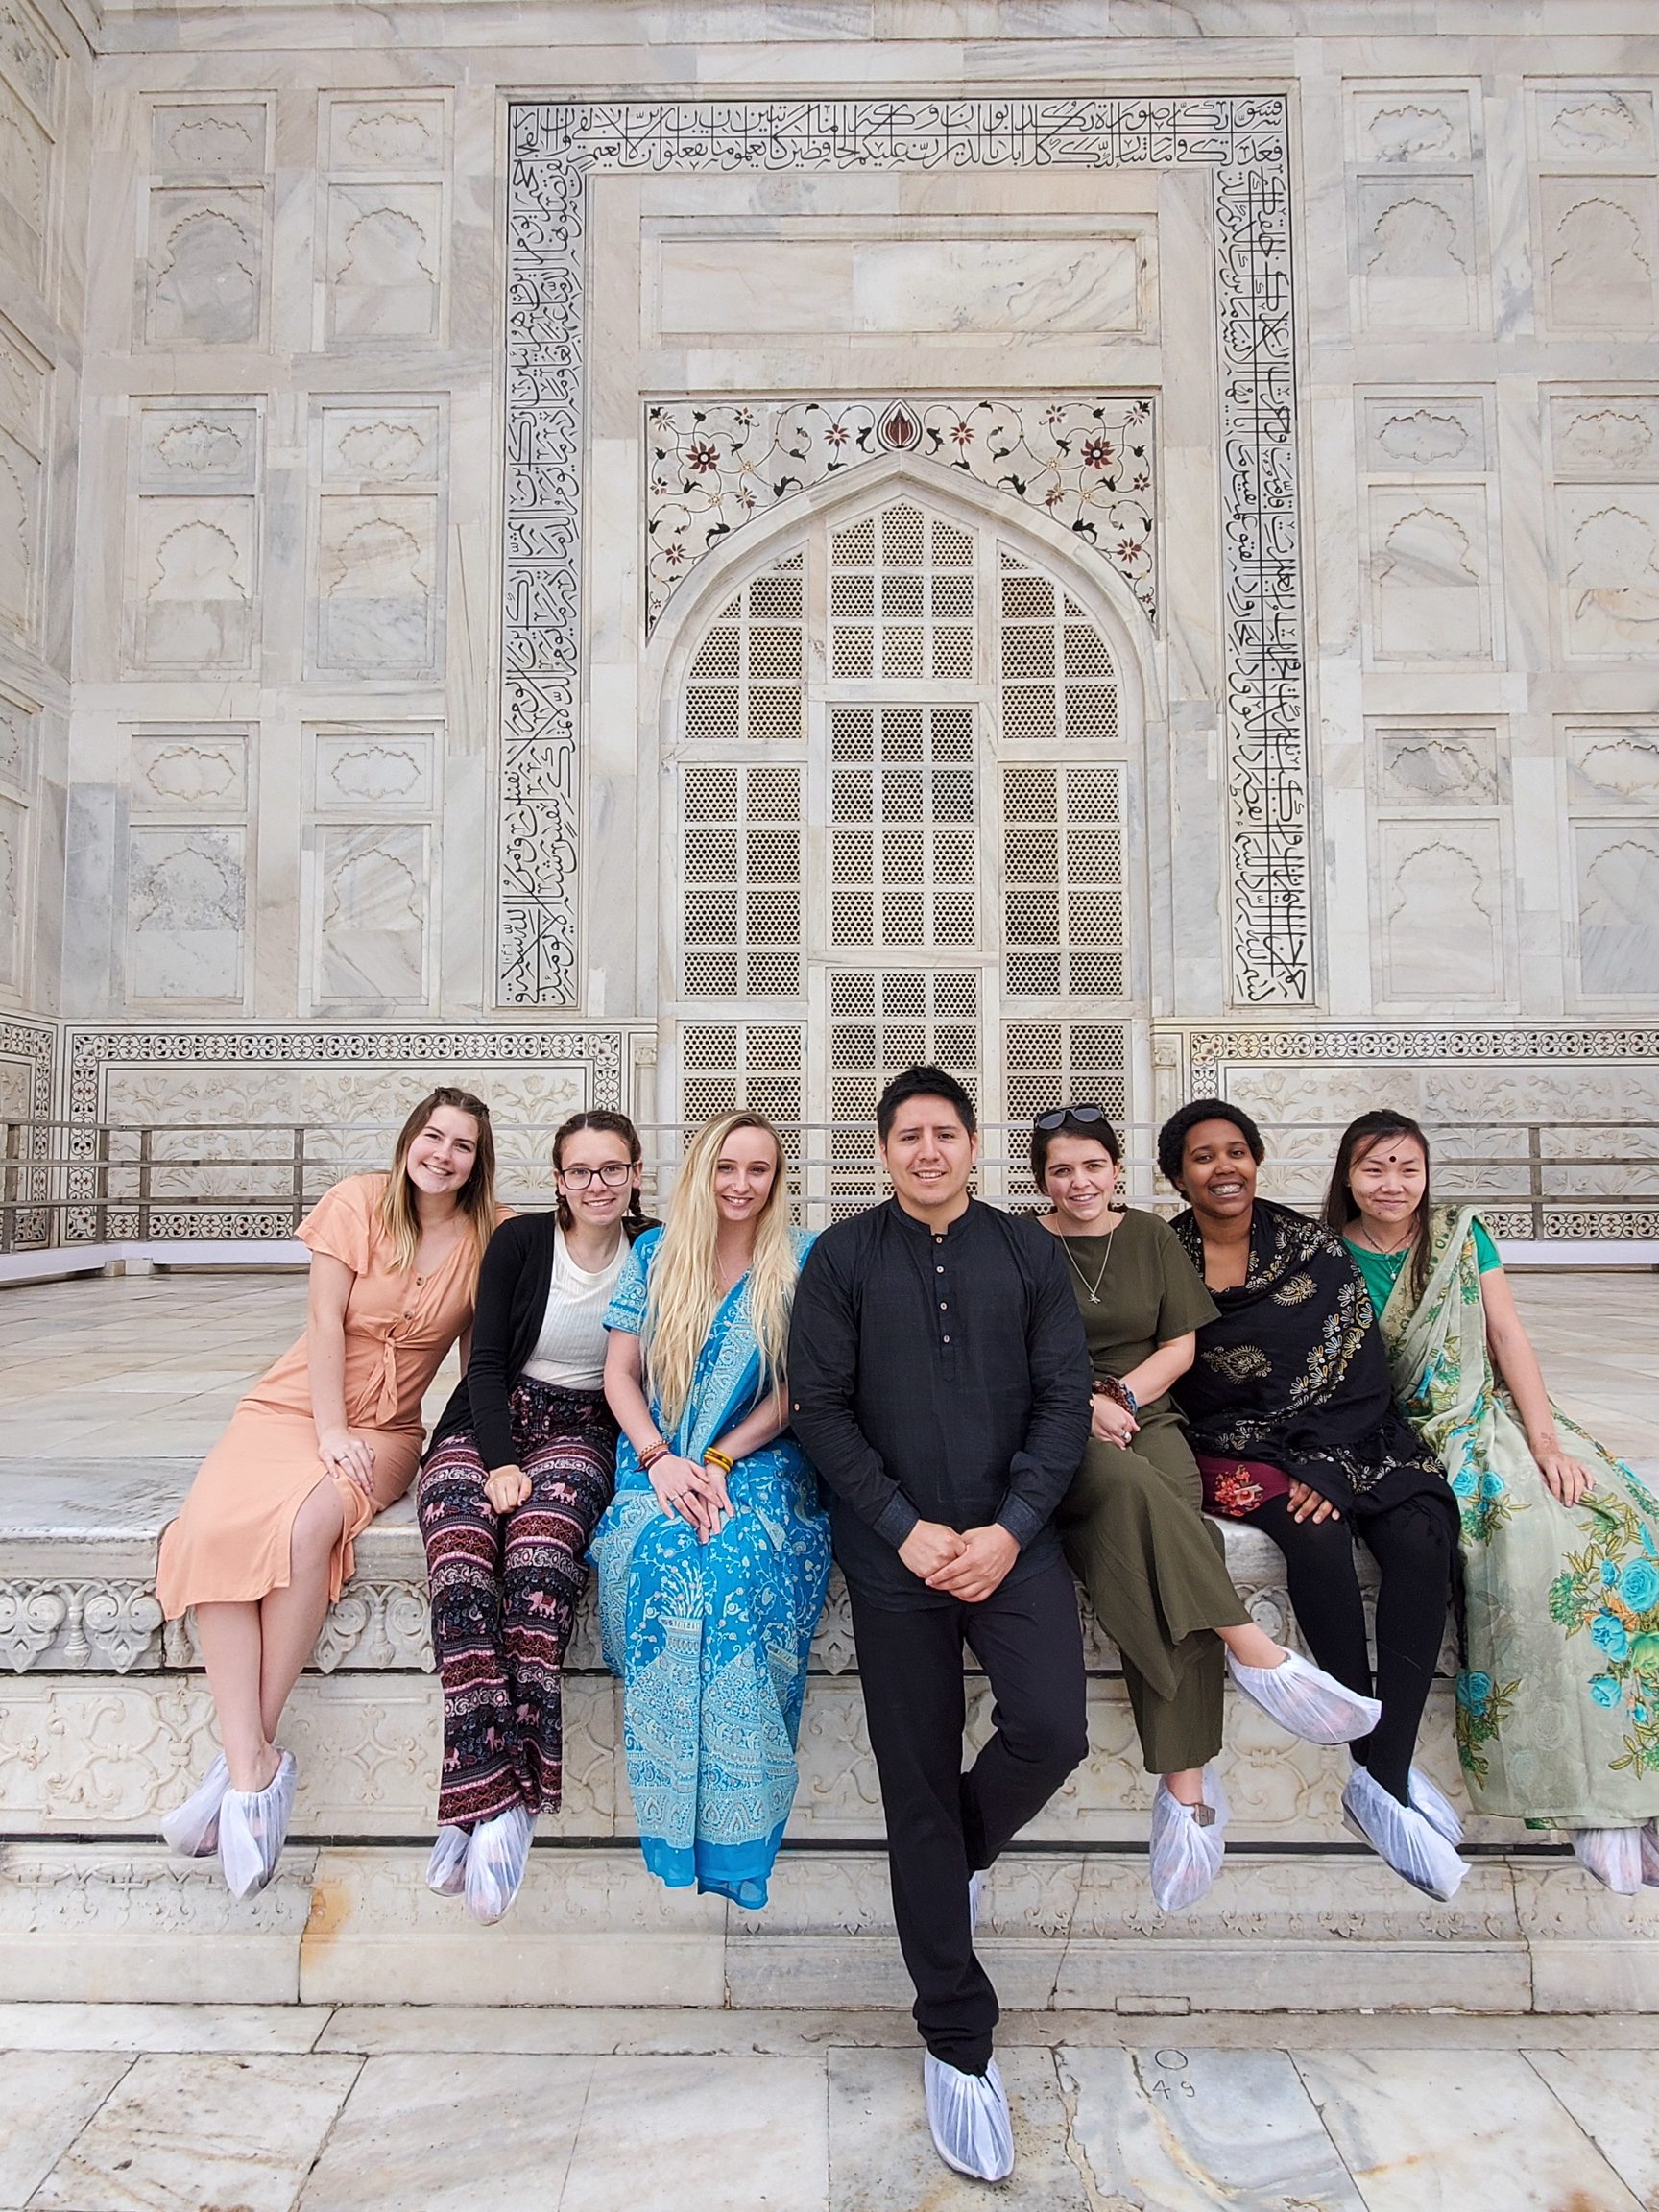 Students at the Taj Mahal in January 2020